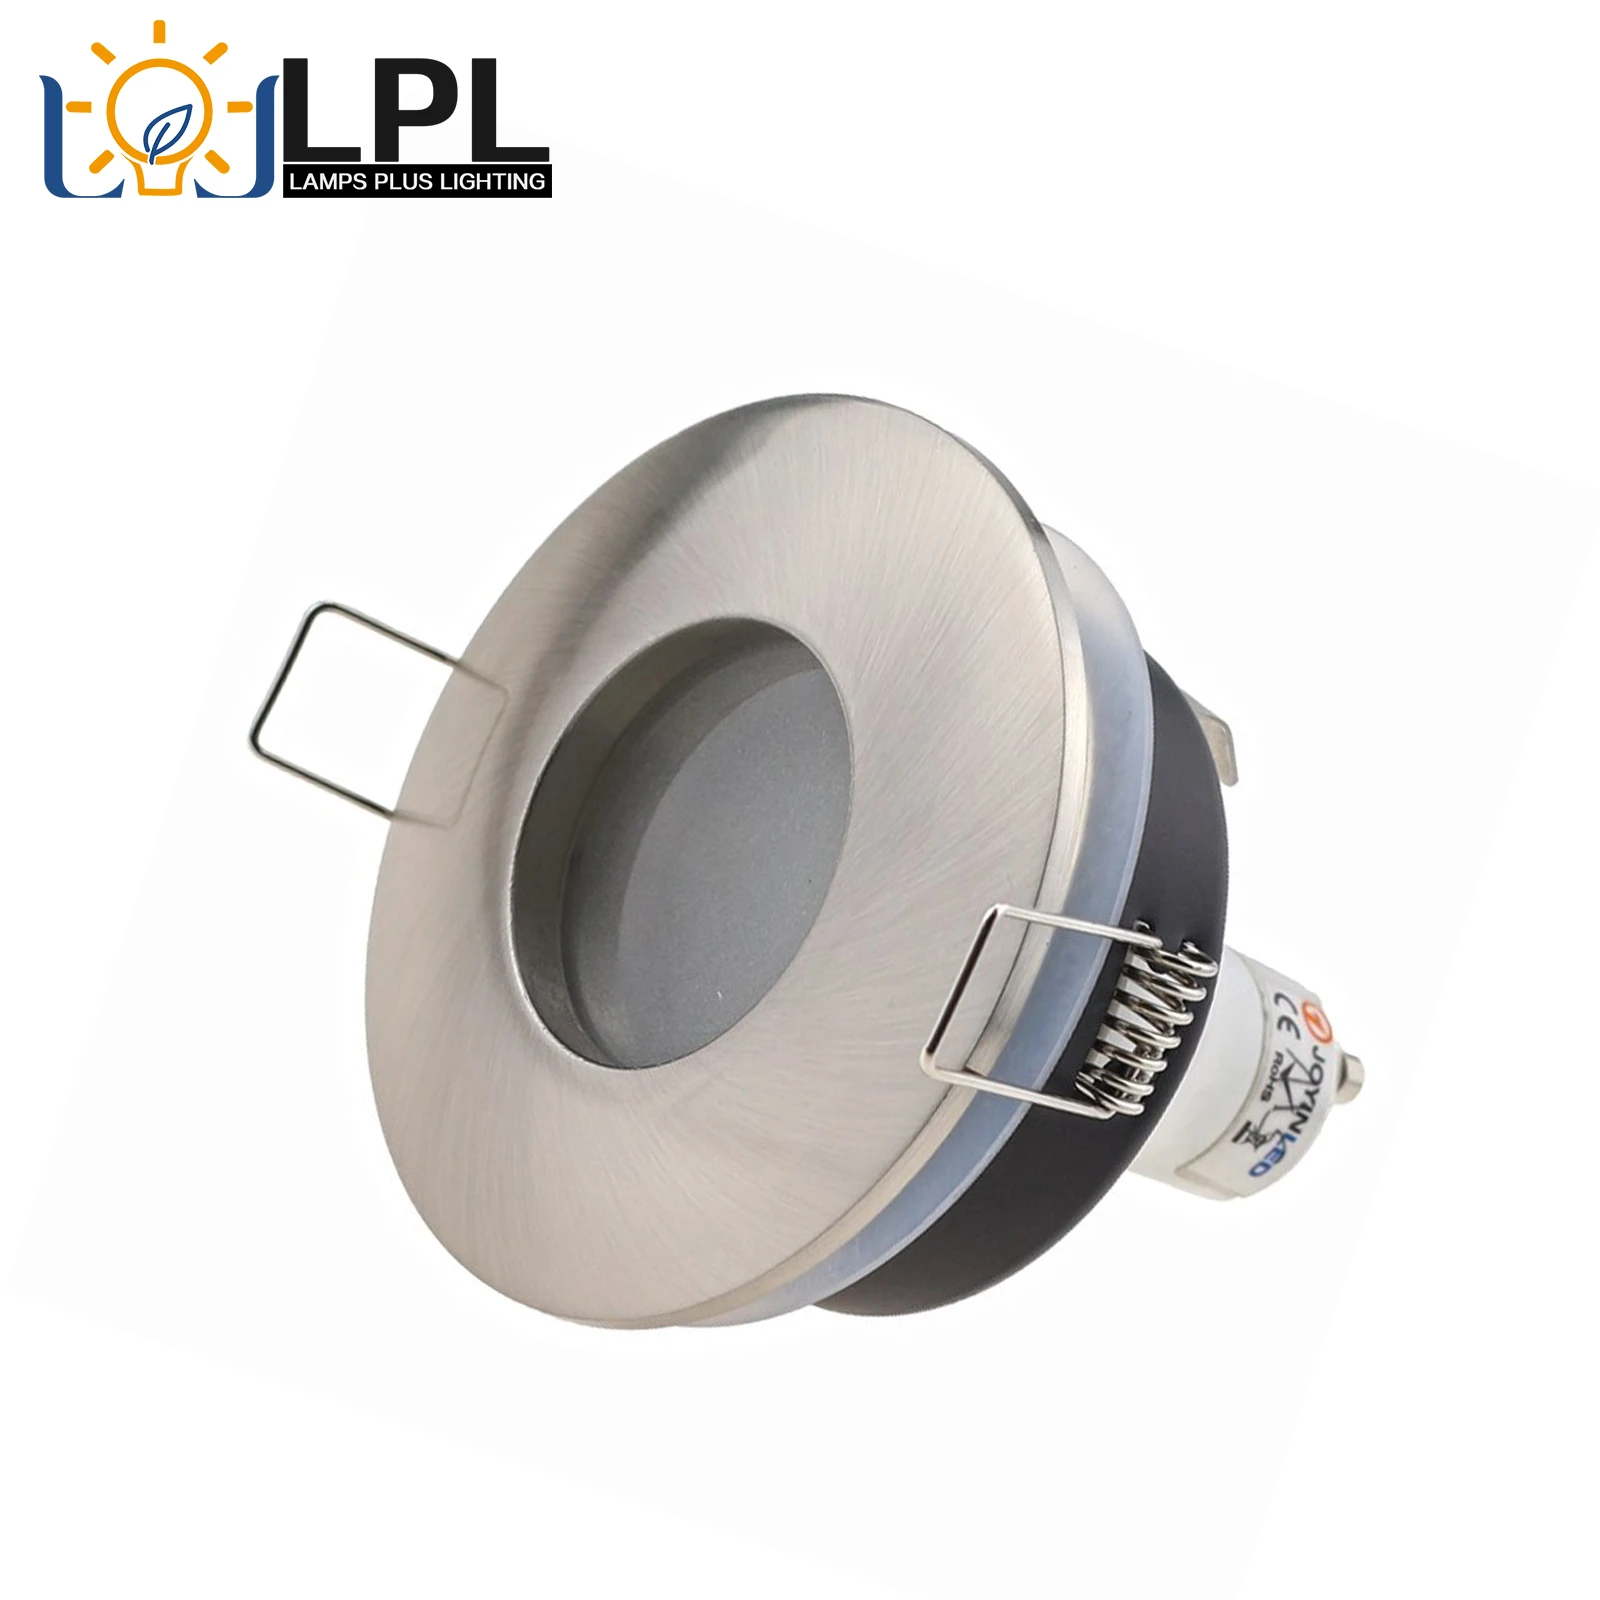 

2pcs New Design IP65 Waterproof Recessed GU10/MR16 Led Spot Light Fixtures Led Downlight Frame LED Bulb Replace MR16 GU5.3 Lamp